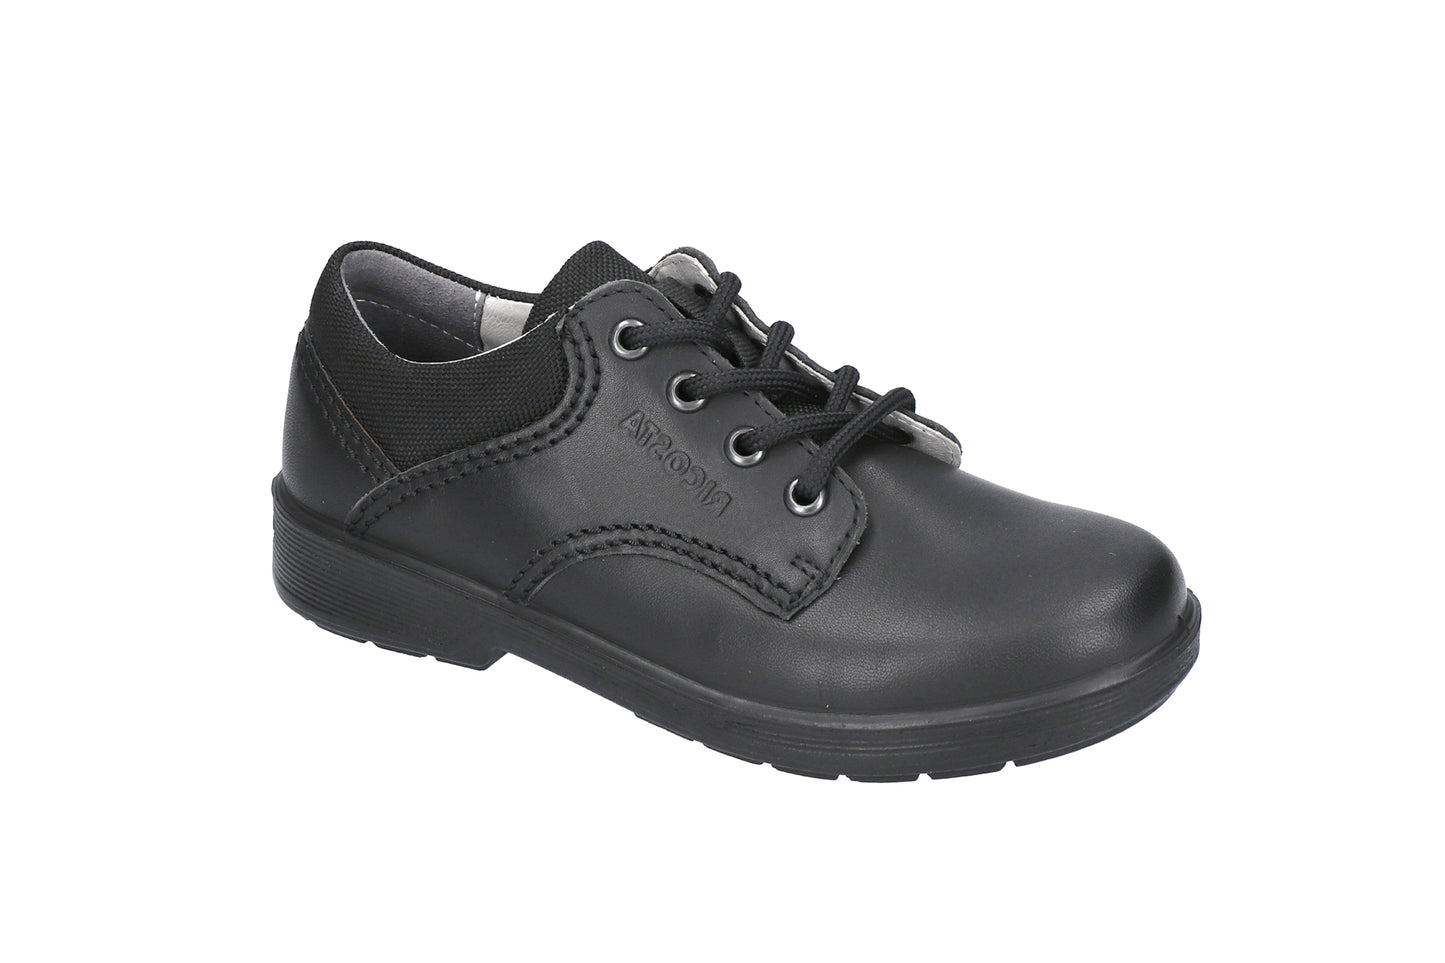 Harry Black Leather Lace-up Boys School Shoe